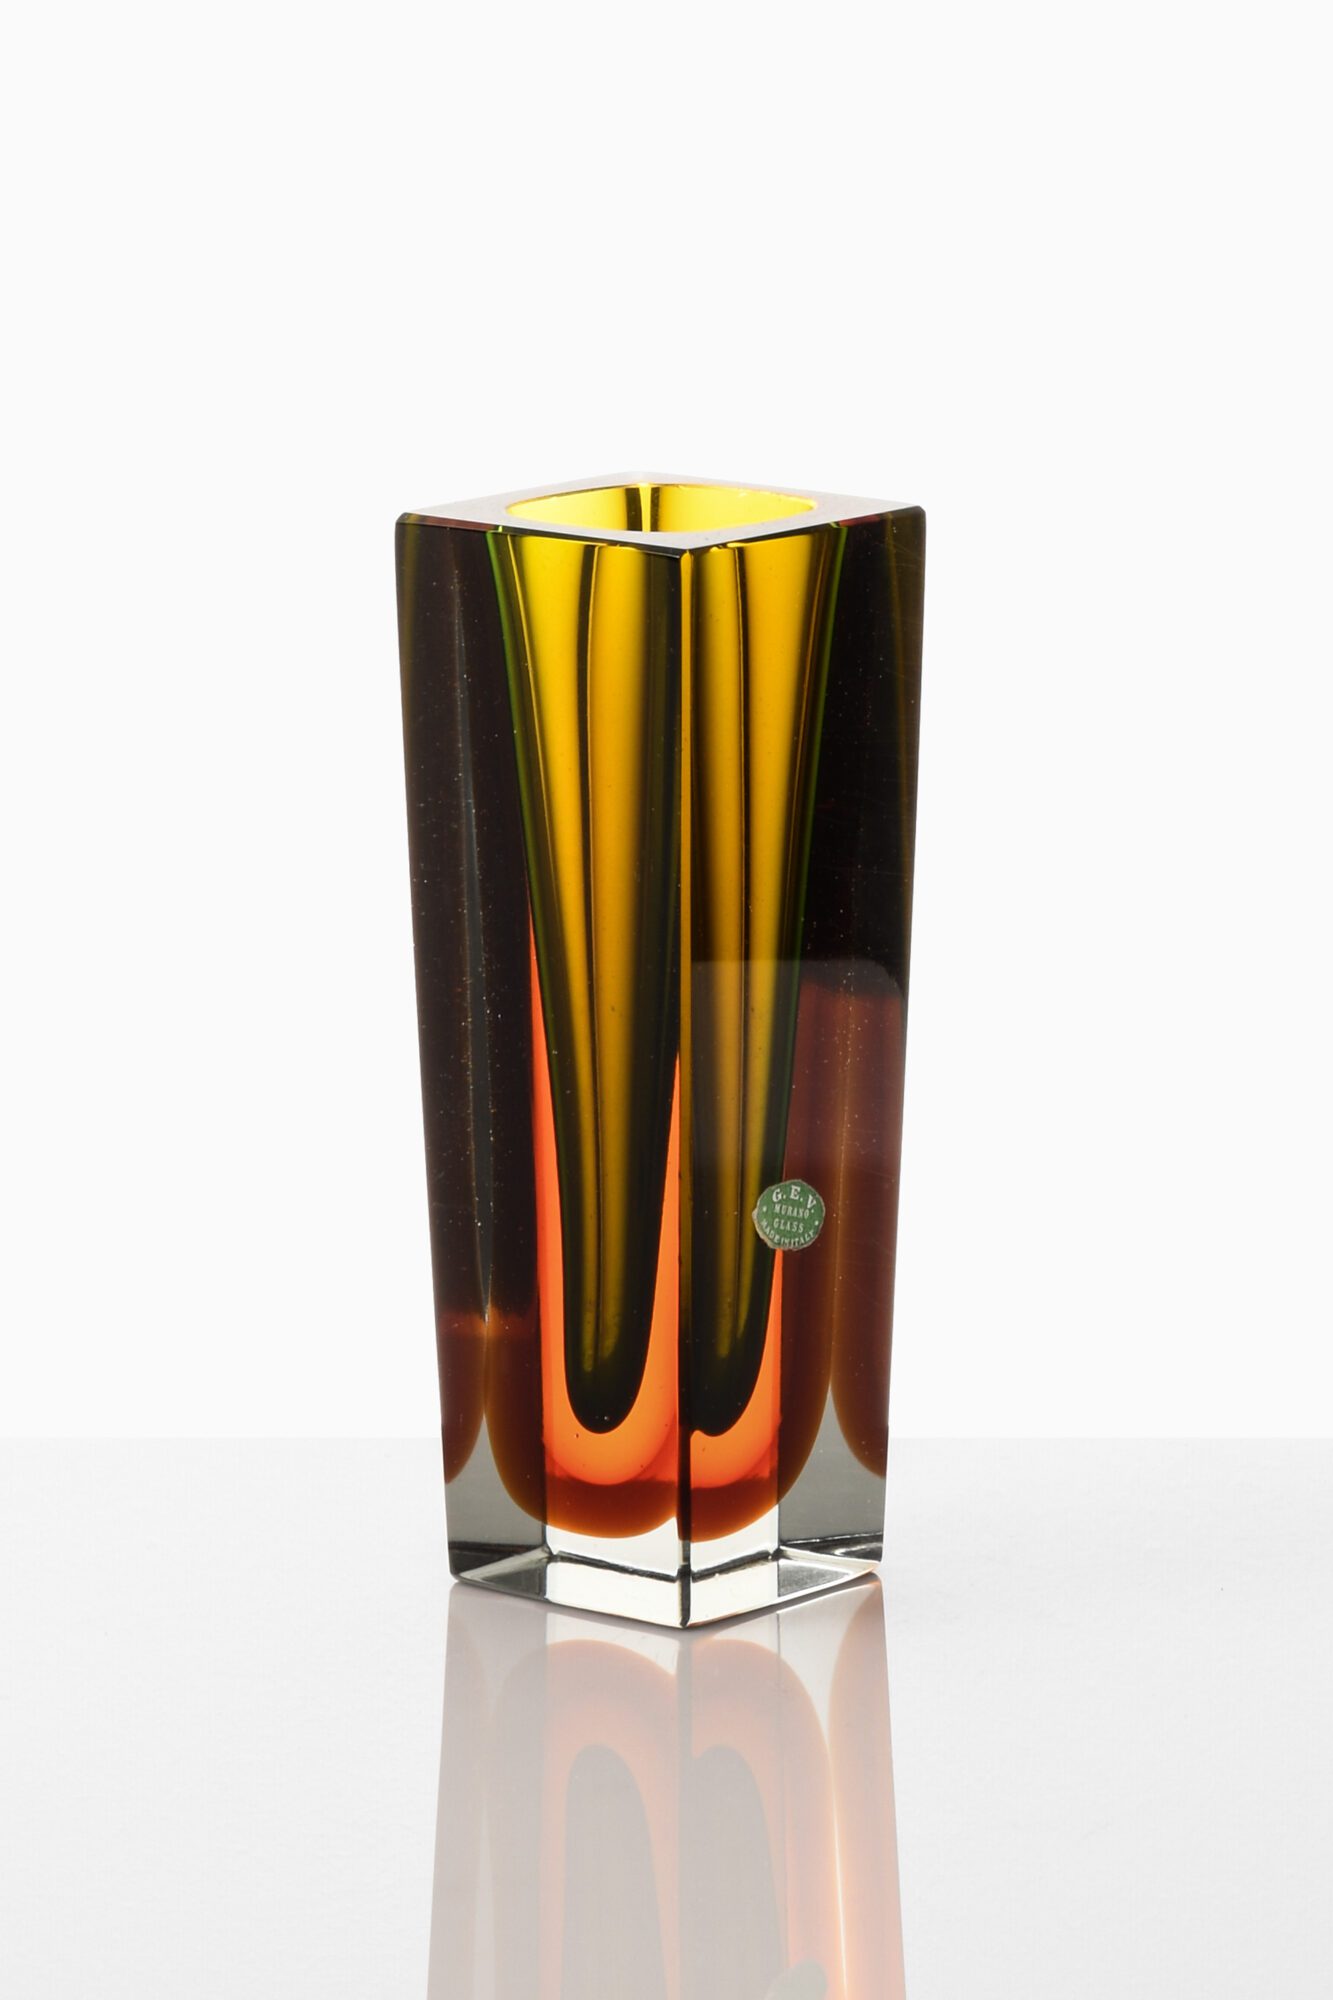 Luigi Mandruzzato glass vase by Murano at Studio Schalling